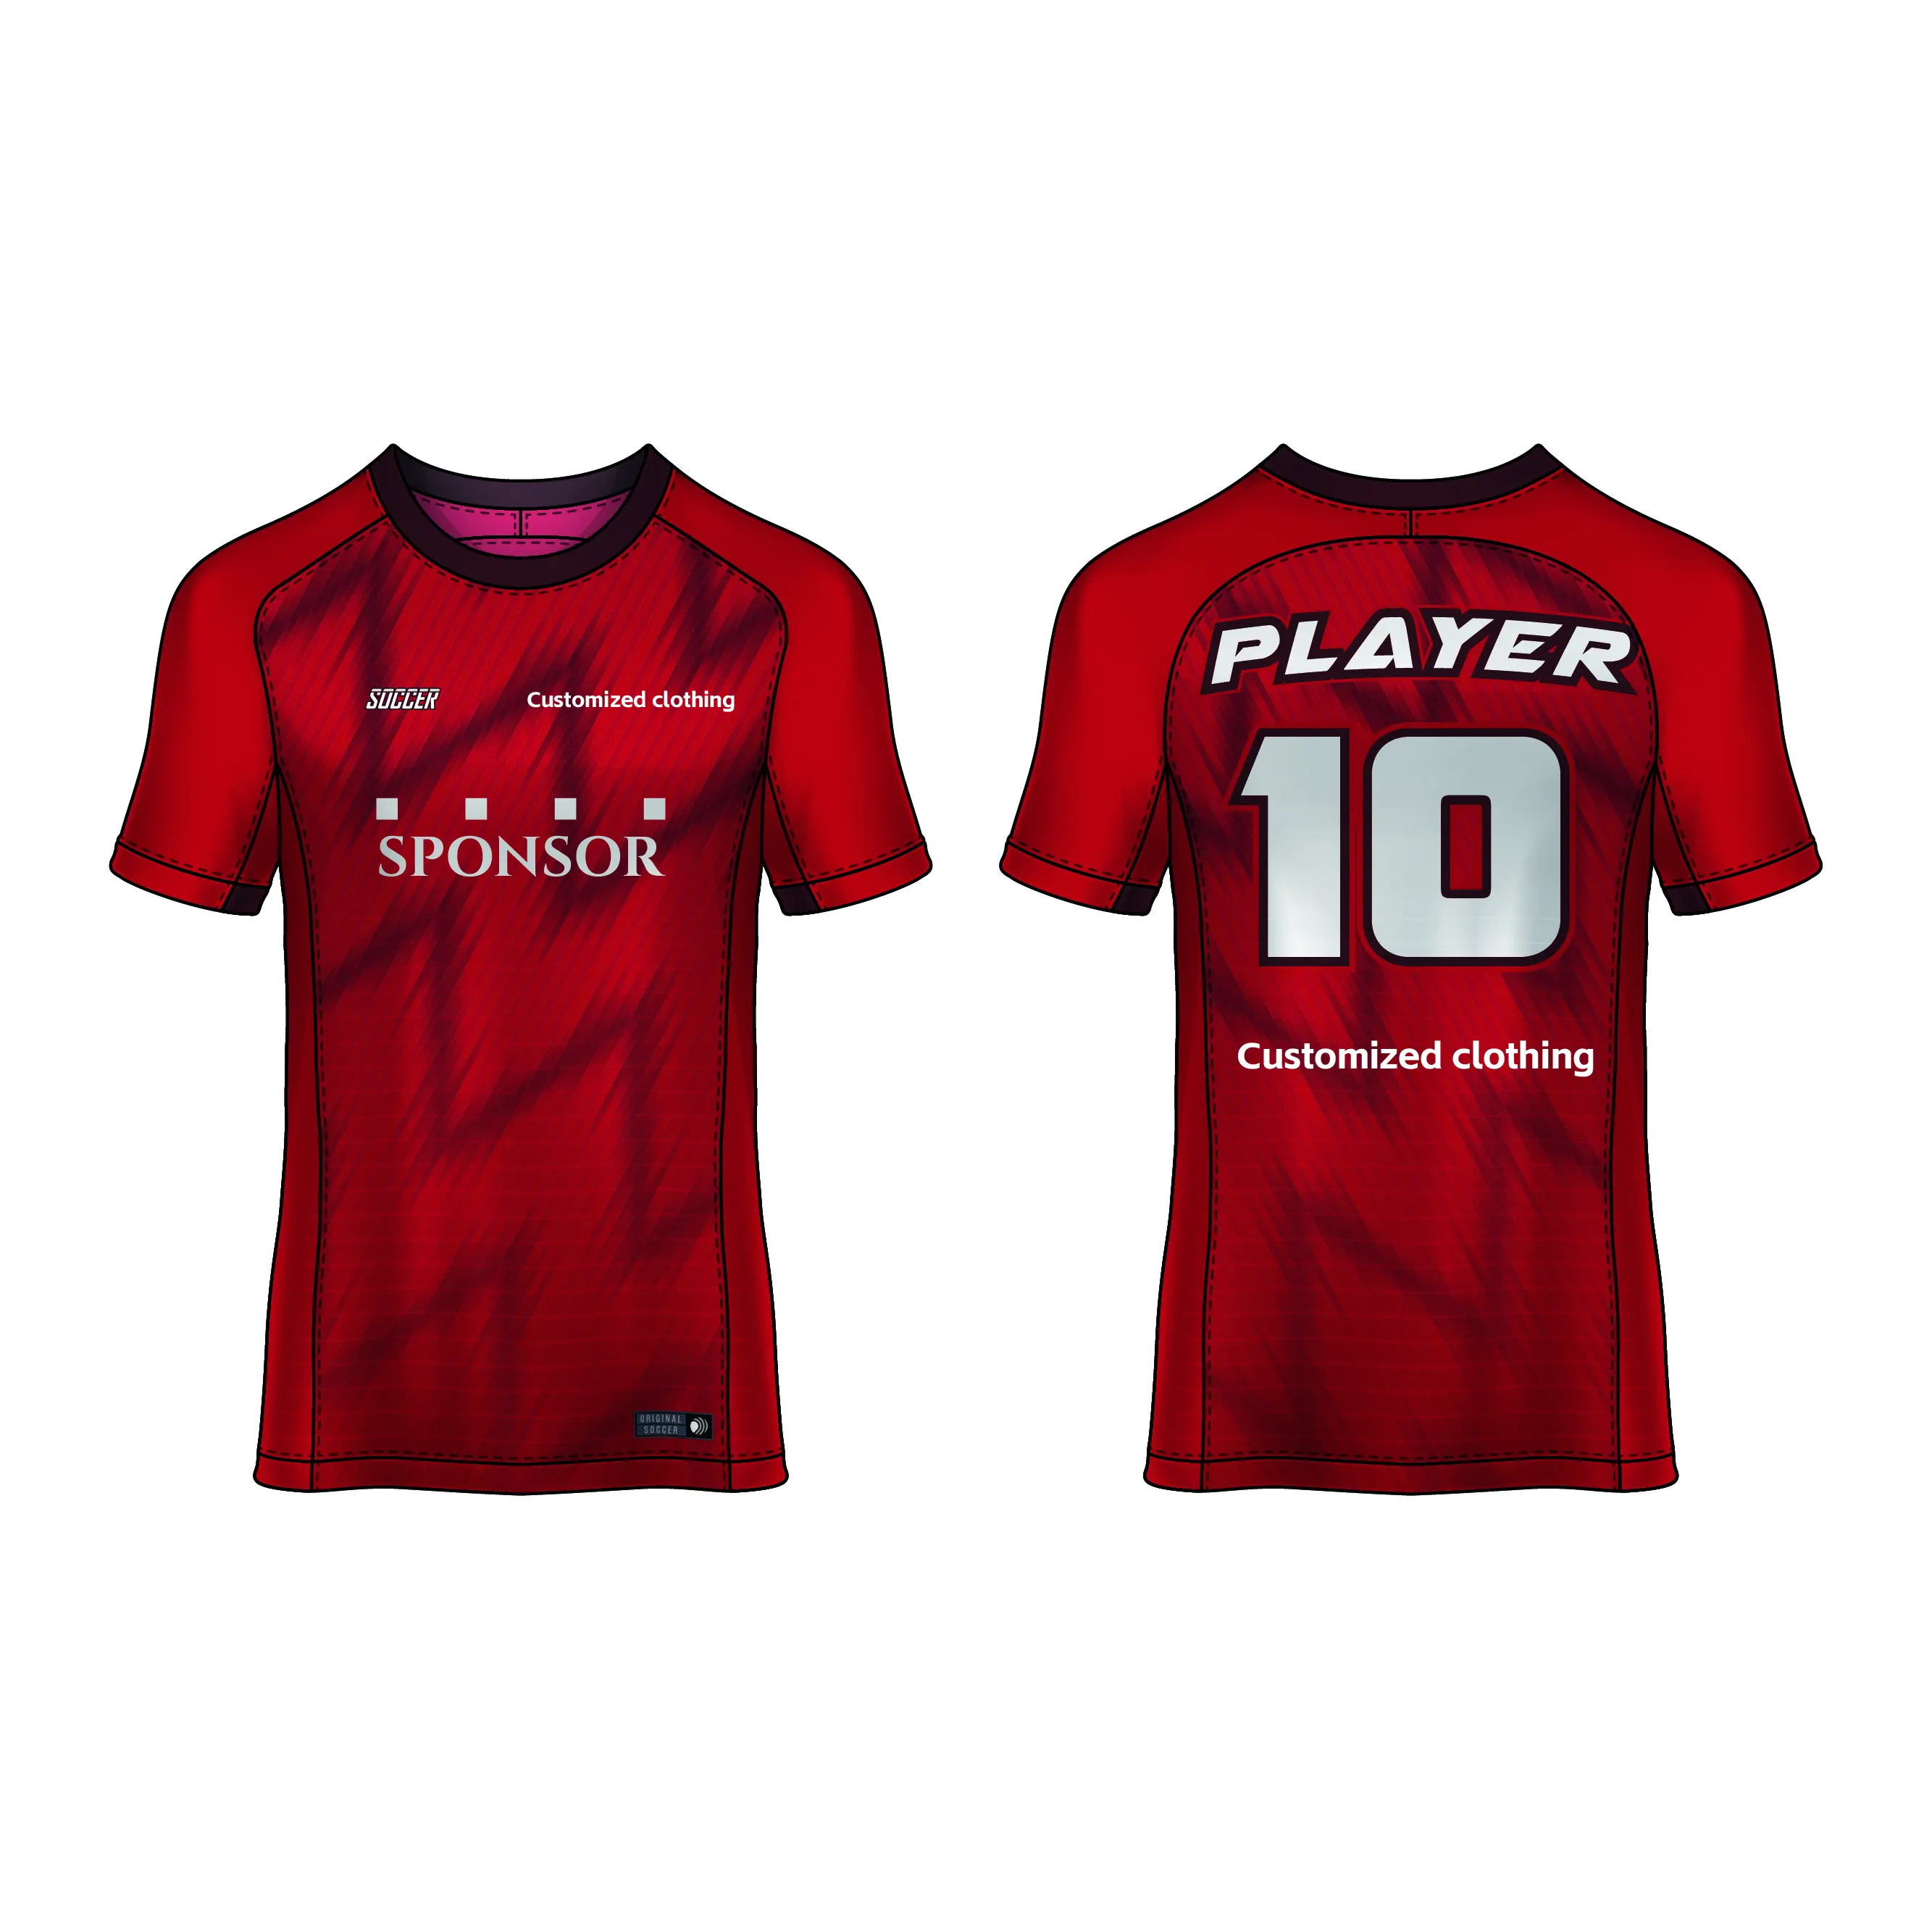 Camisa de futebol americano de malha costurada personalizada, camisa de futebol de clube